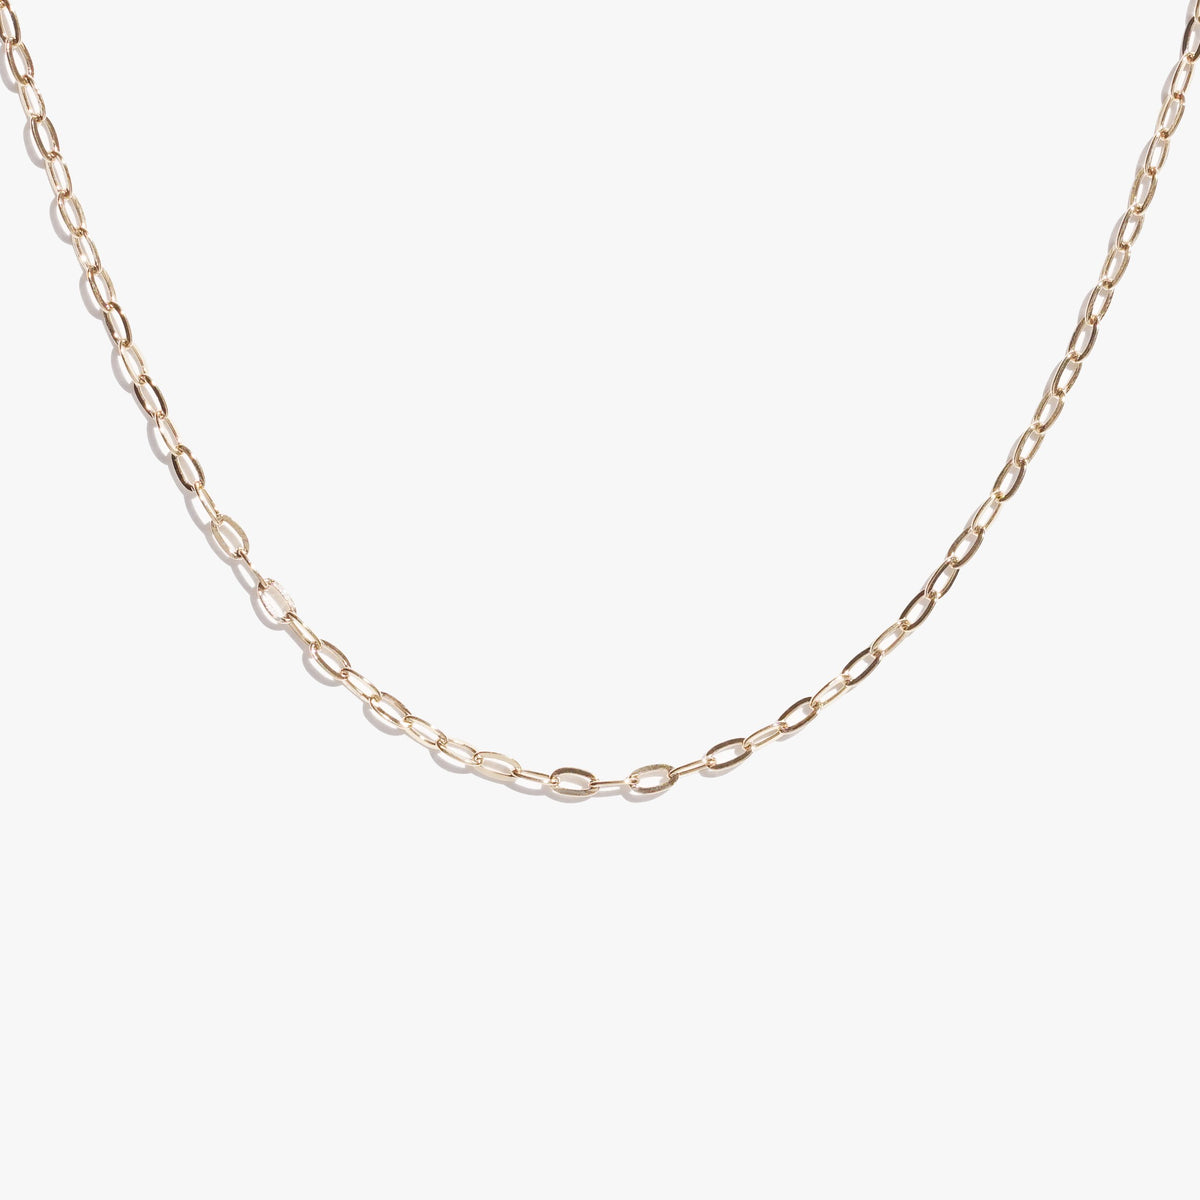 Oval wire links necklace - Brett & Leni Jewellery